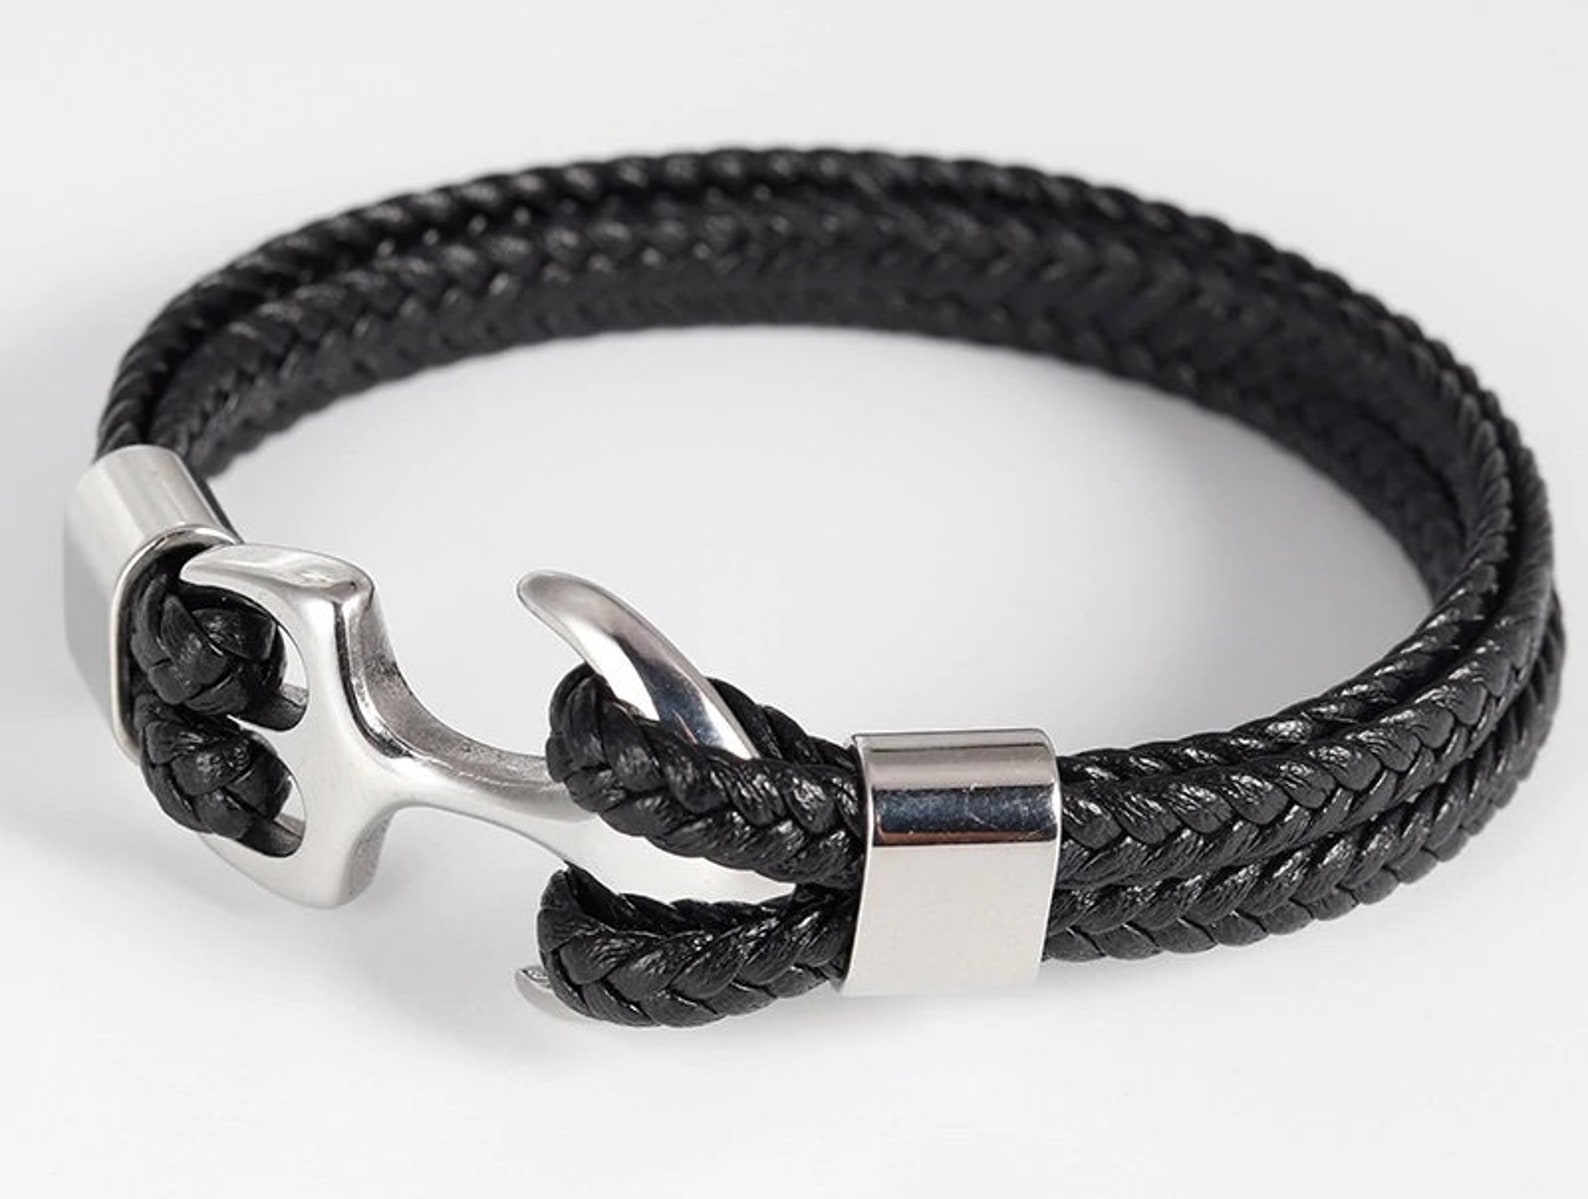 Anchor bracelet men Anchor bracelet leather Leather anchor | Etsy